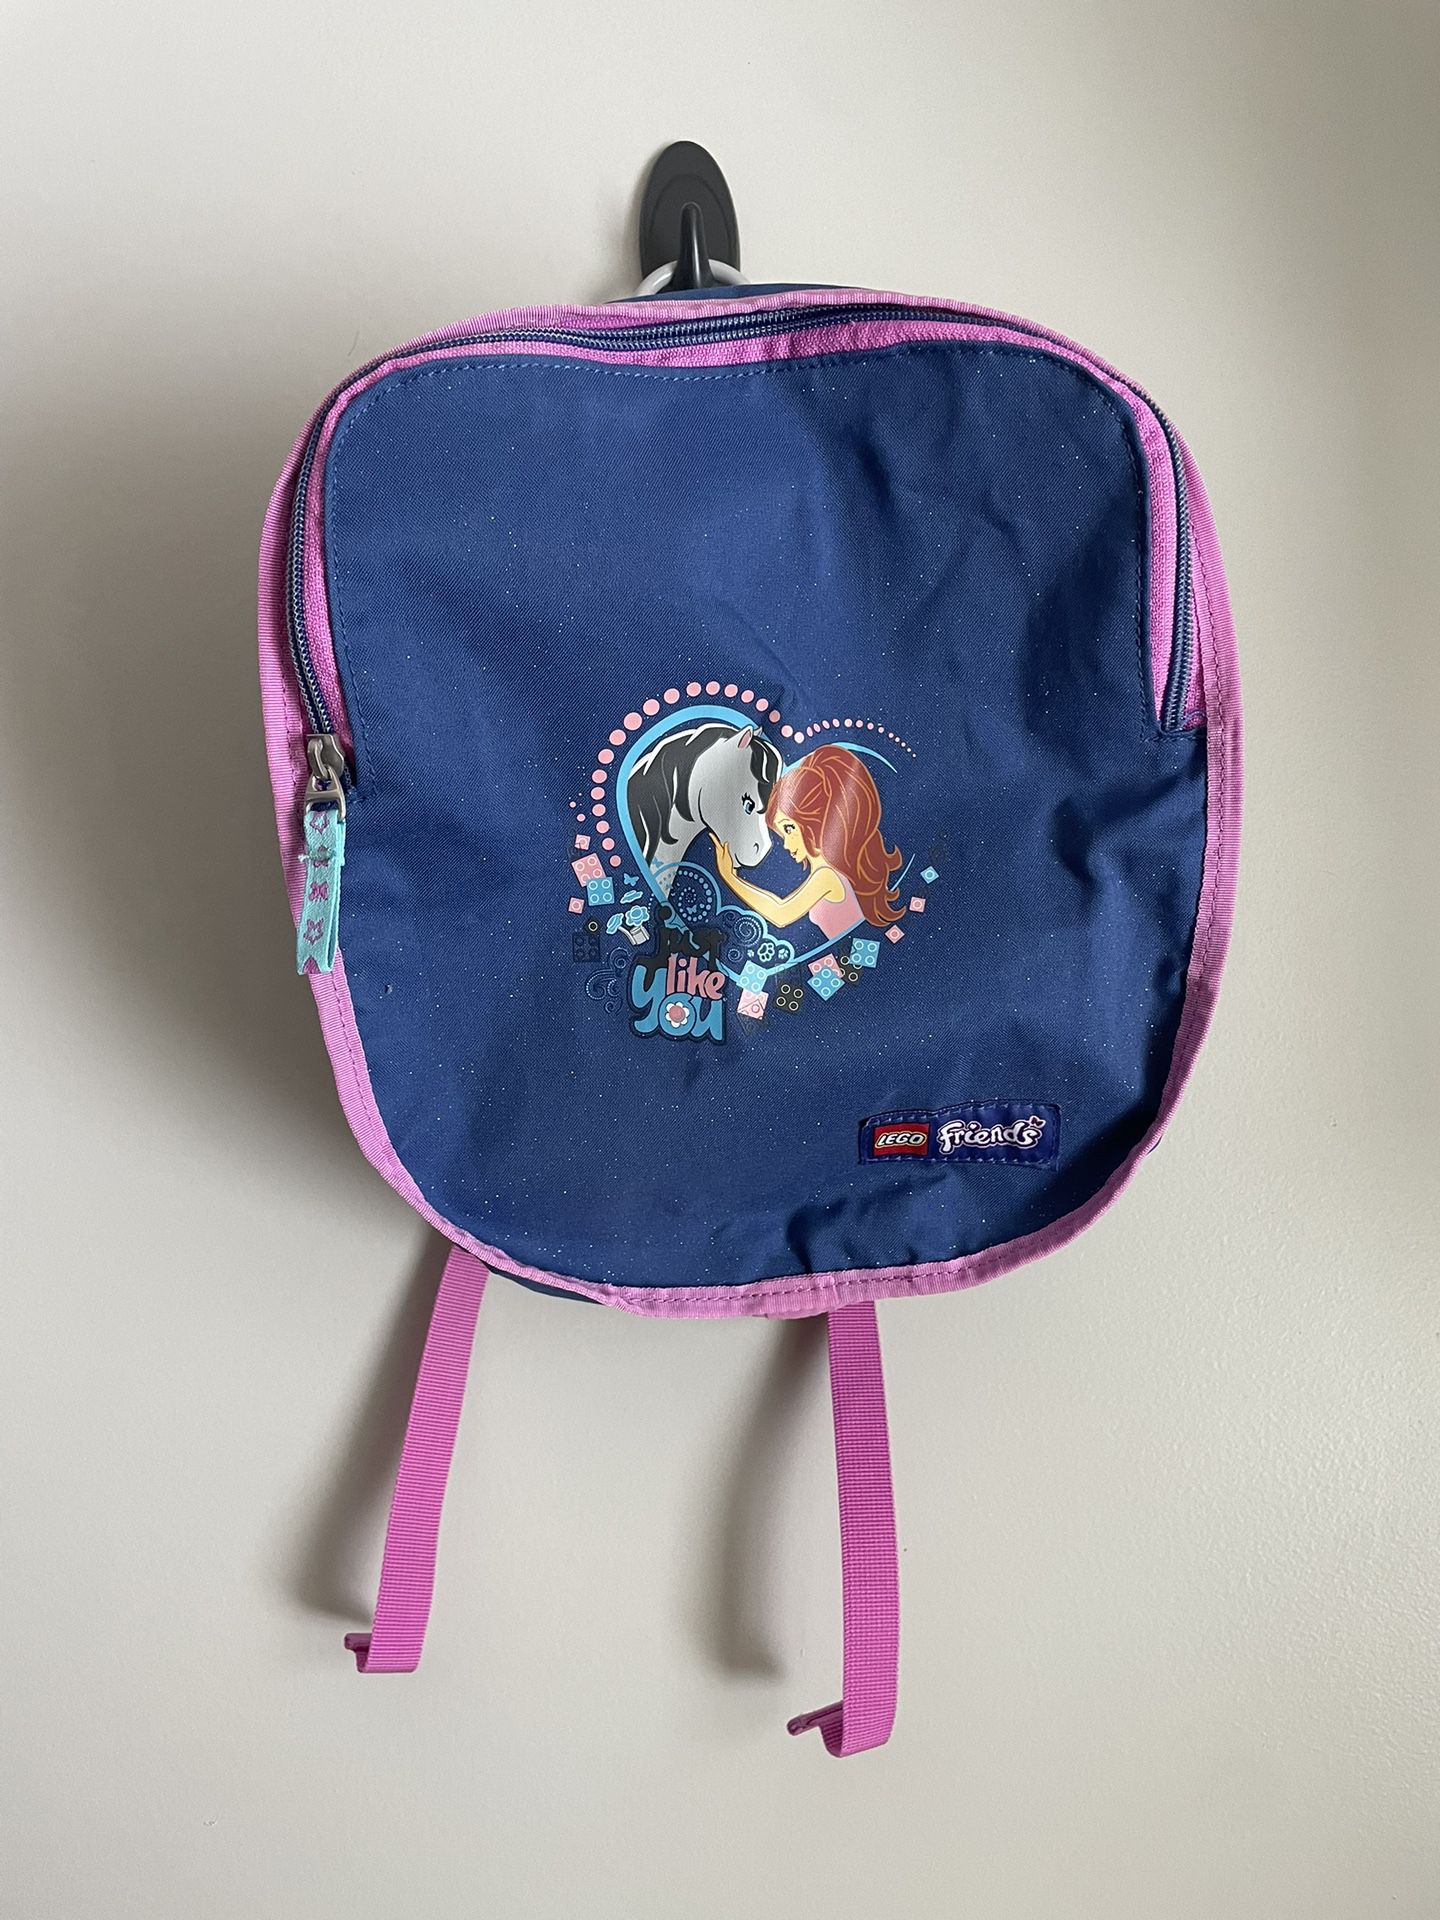 Lego Friends Storage & Travel Backpack Blue Purple Sparkle Girl & Gray Pony